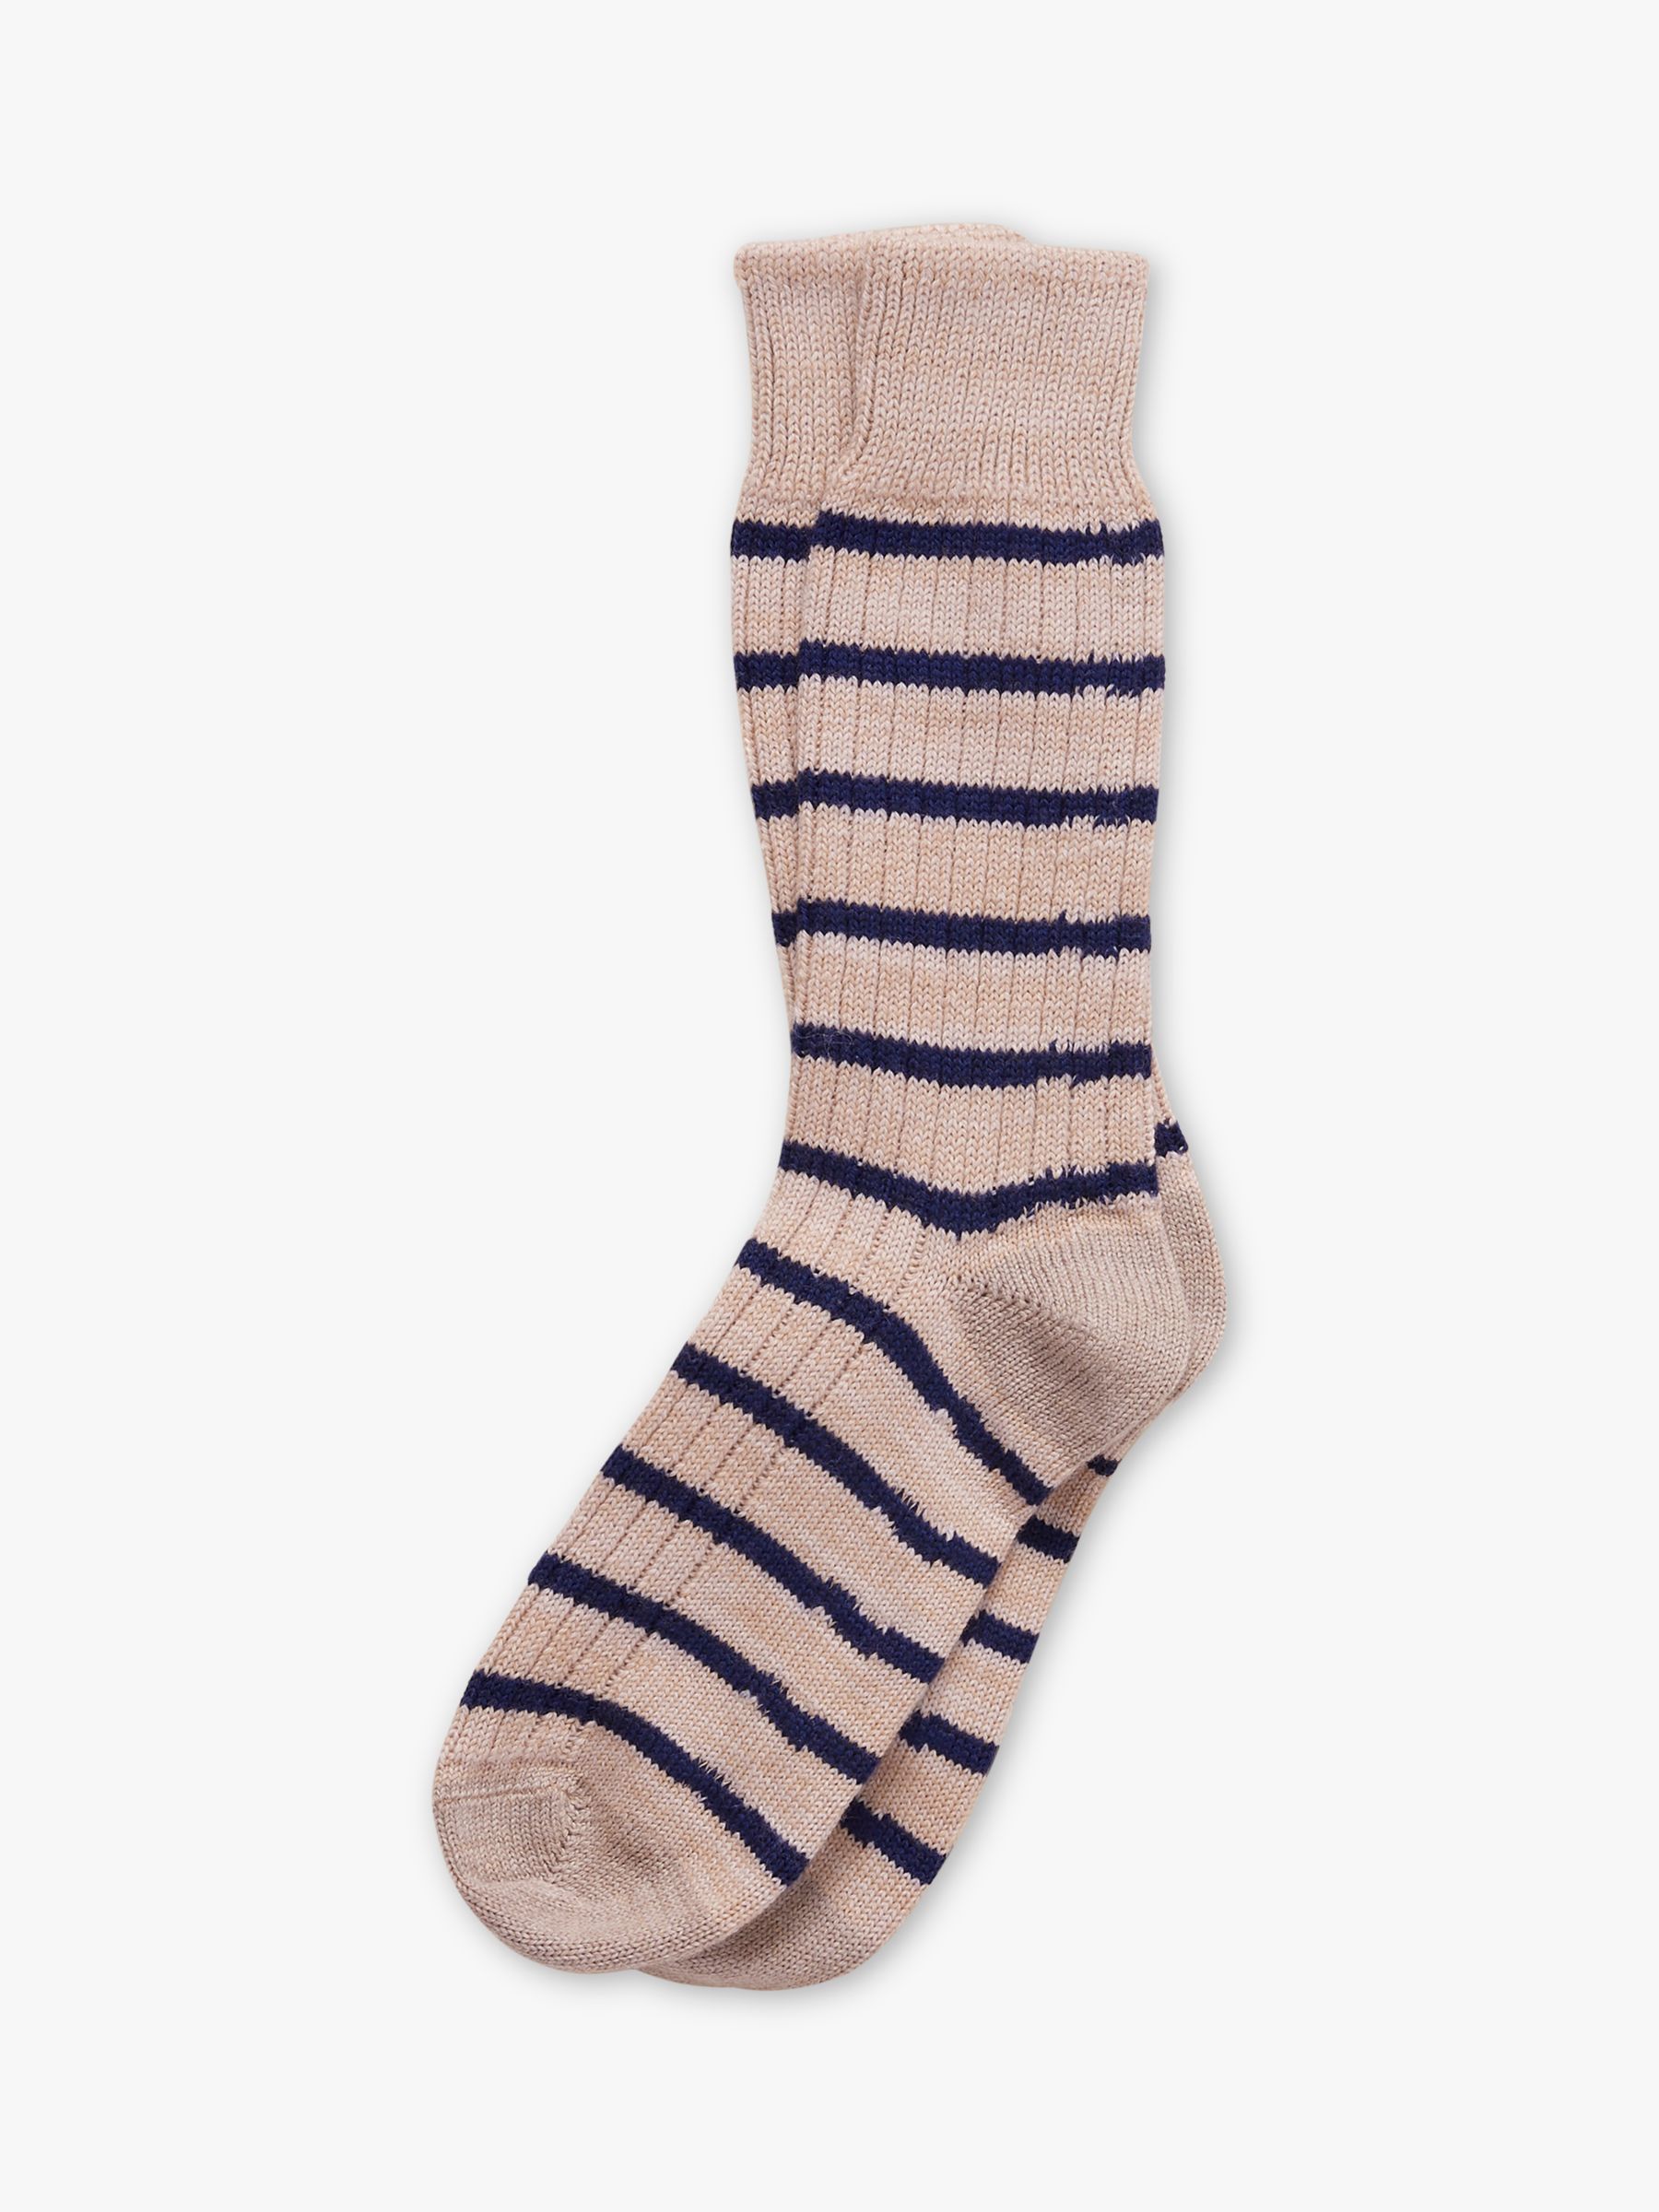 Dear Denier Celine Contrast Rib Knit Socks, £19.00